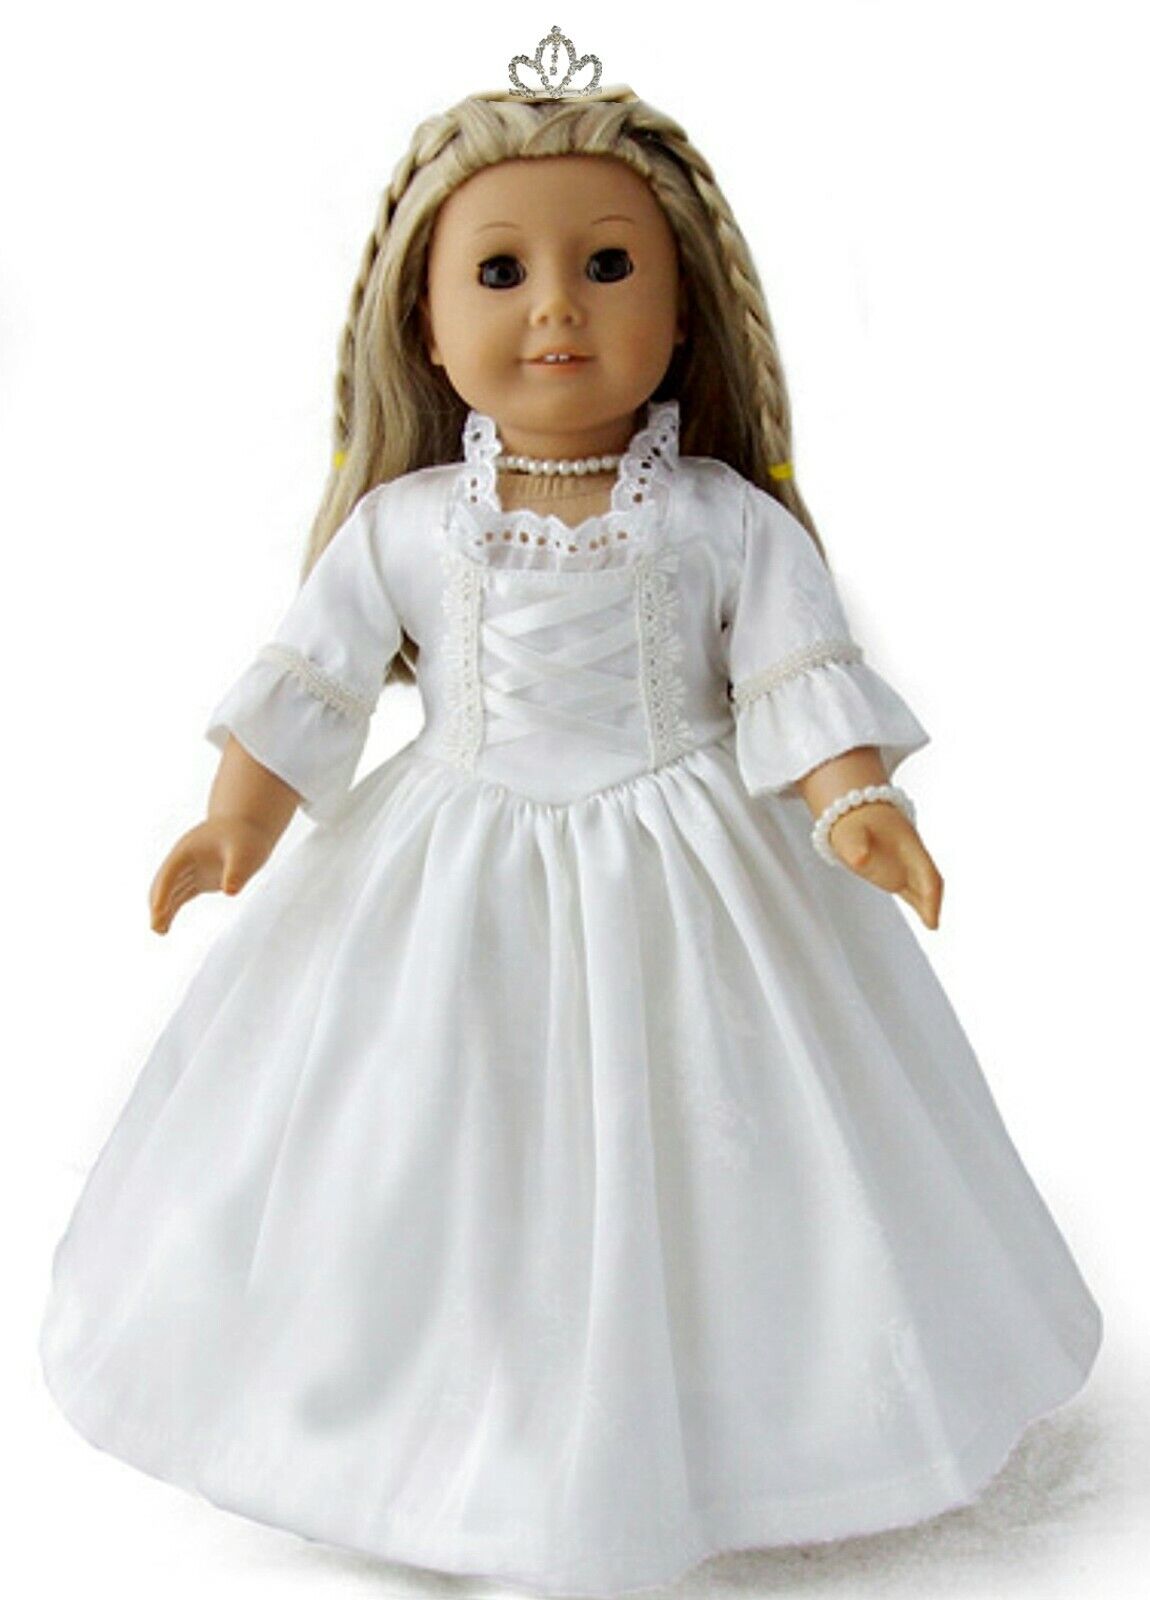 White Jacquard Wedding Dress w/ Tiara & Necklace for 18" Ame